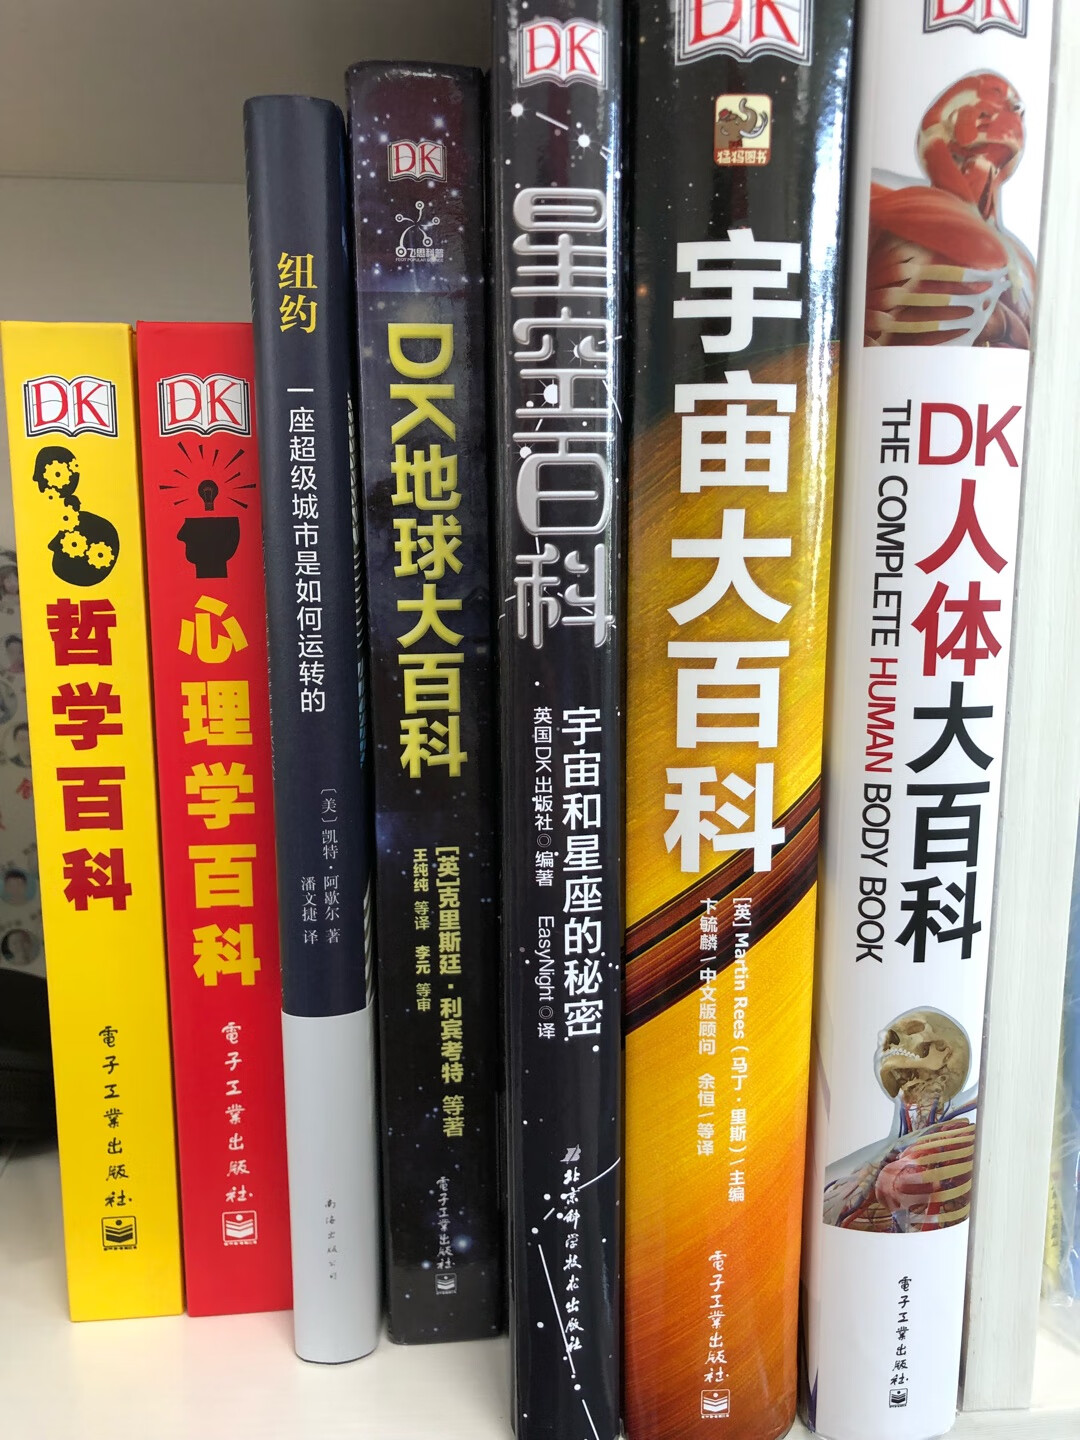 DK的书质量没话说，物流也很快